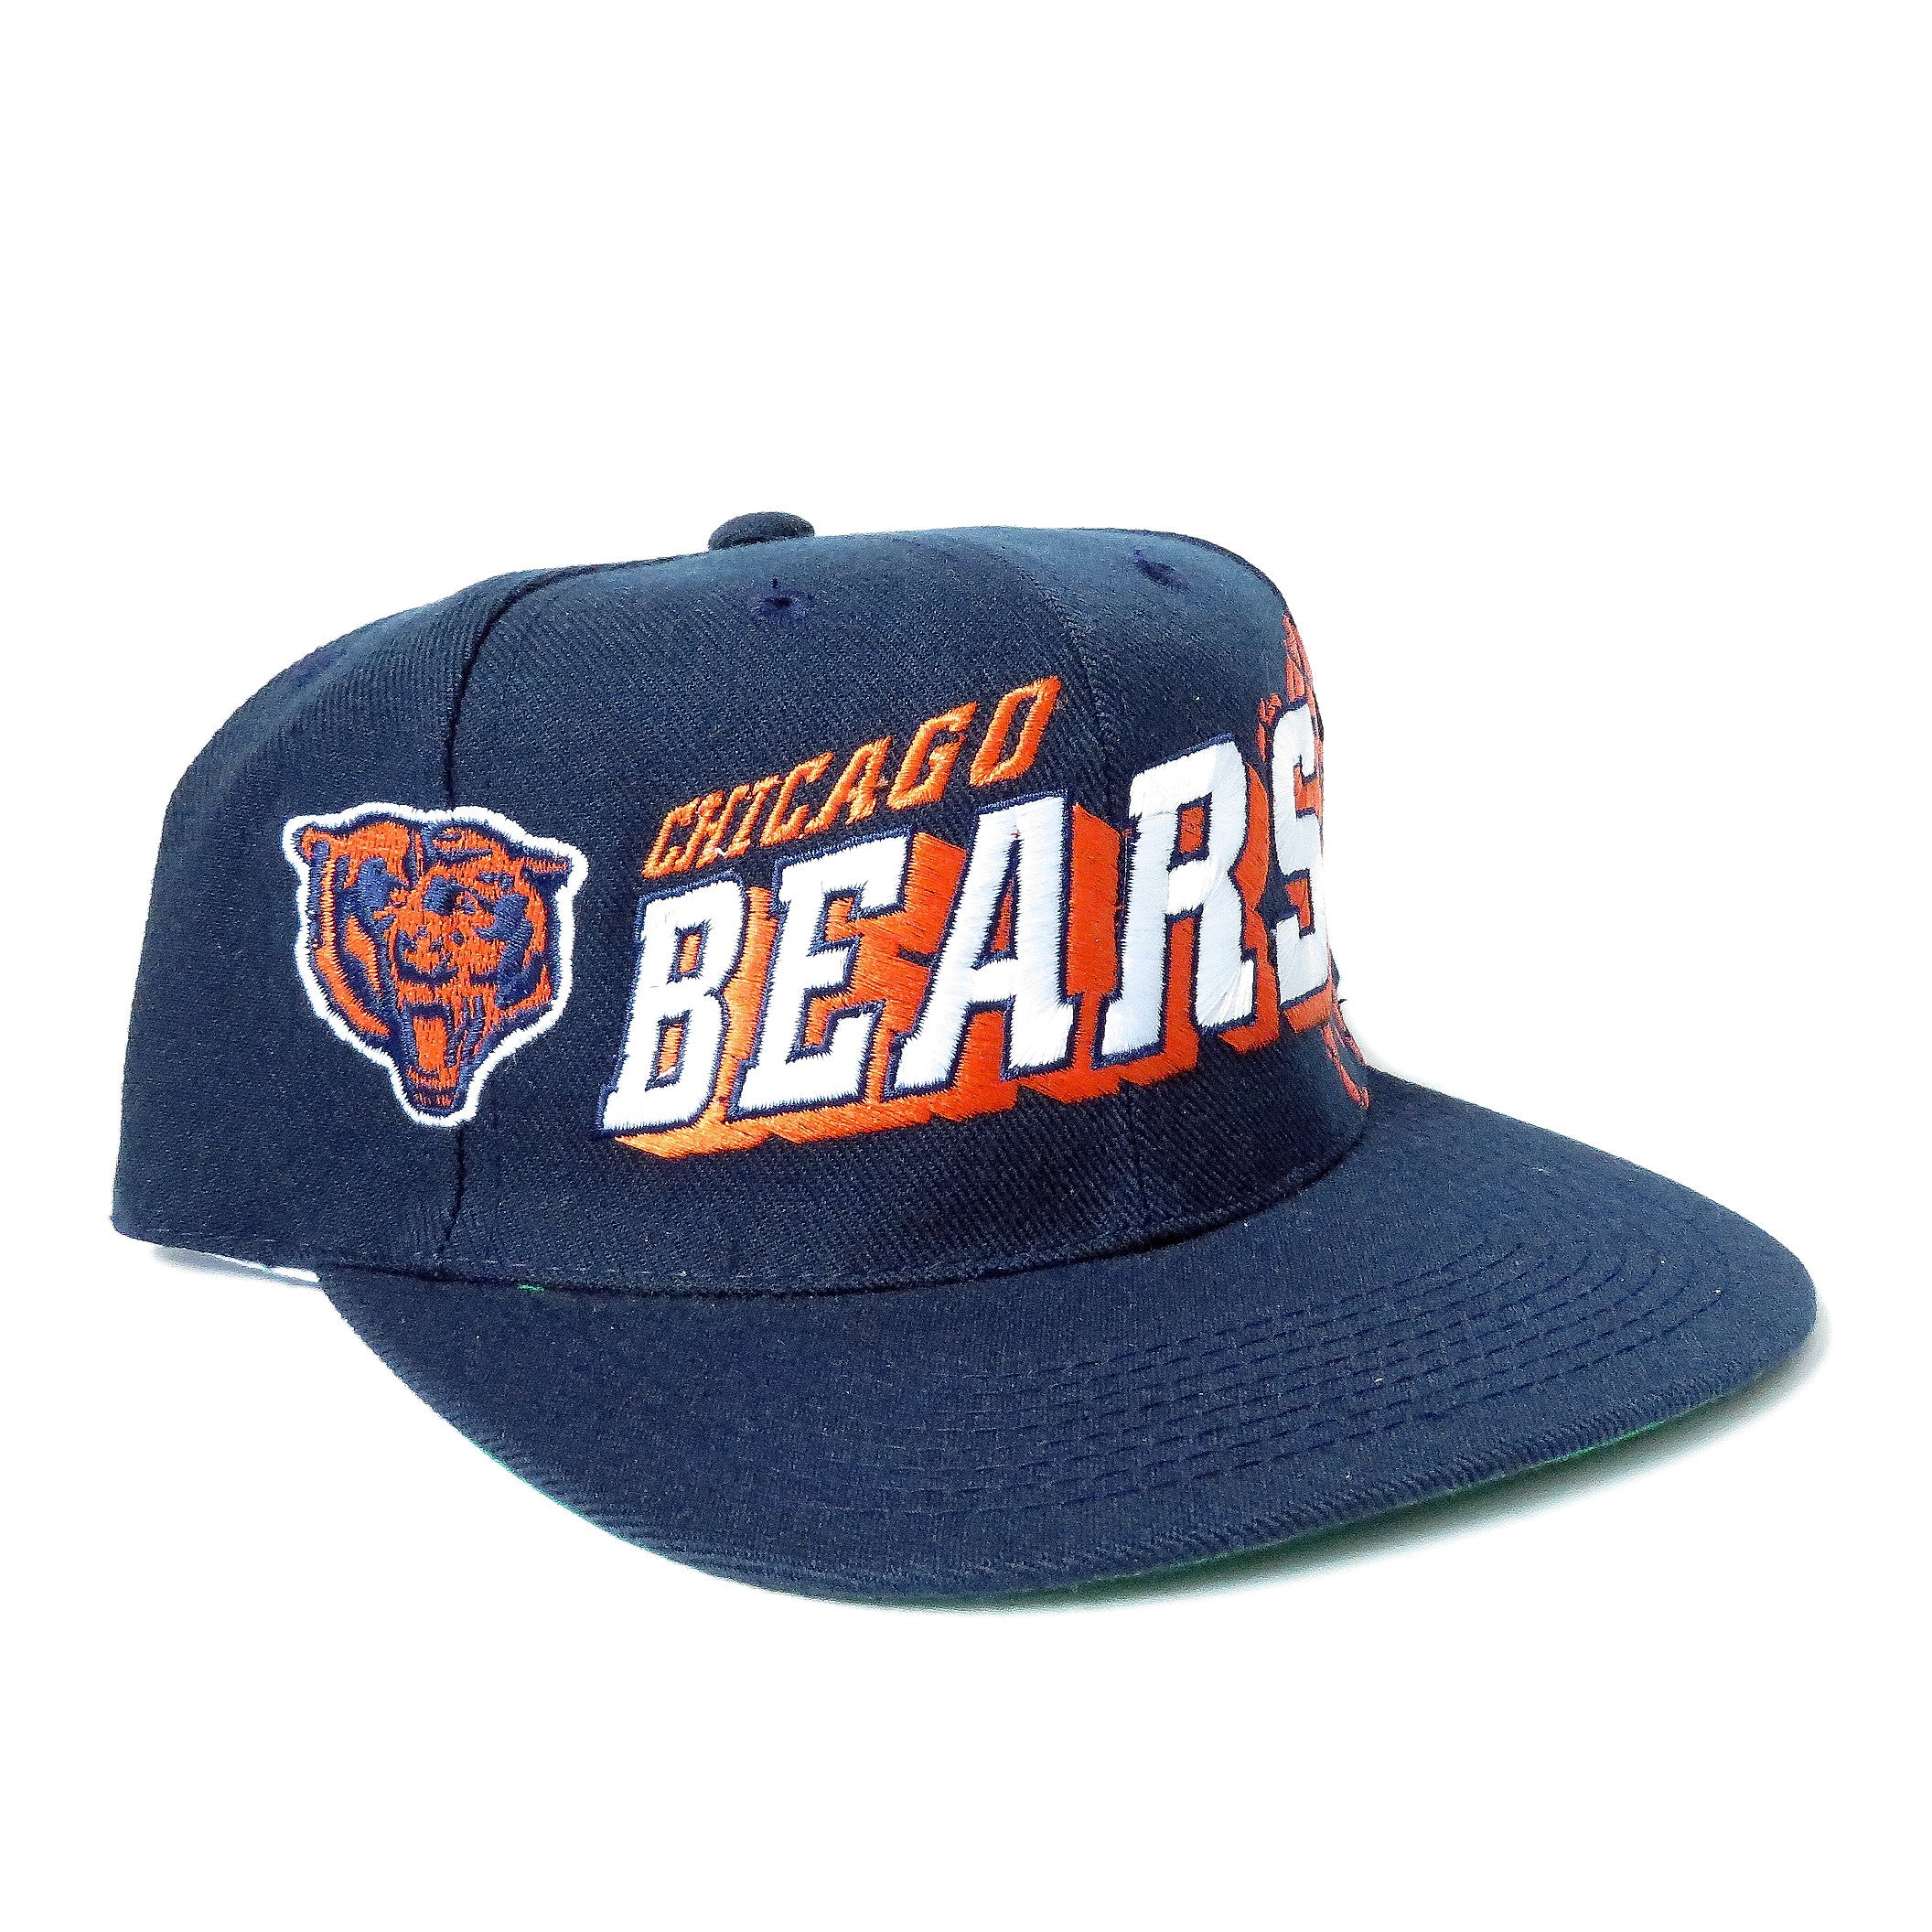 Vintage Chicago Bears Sports Specialties Snapback Hat